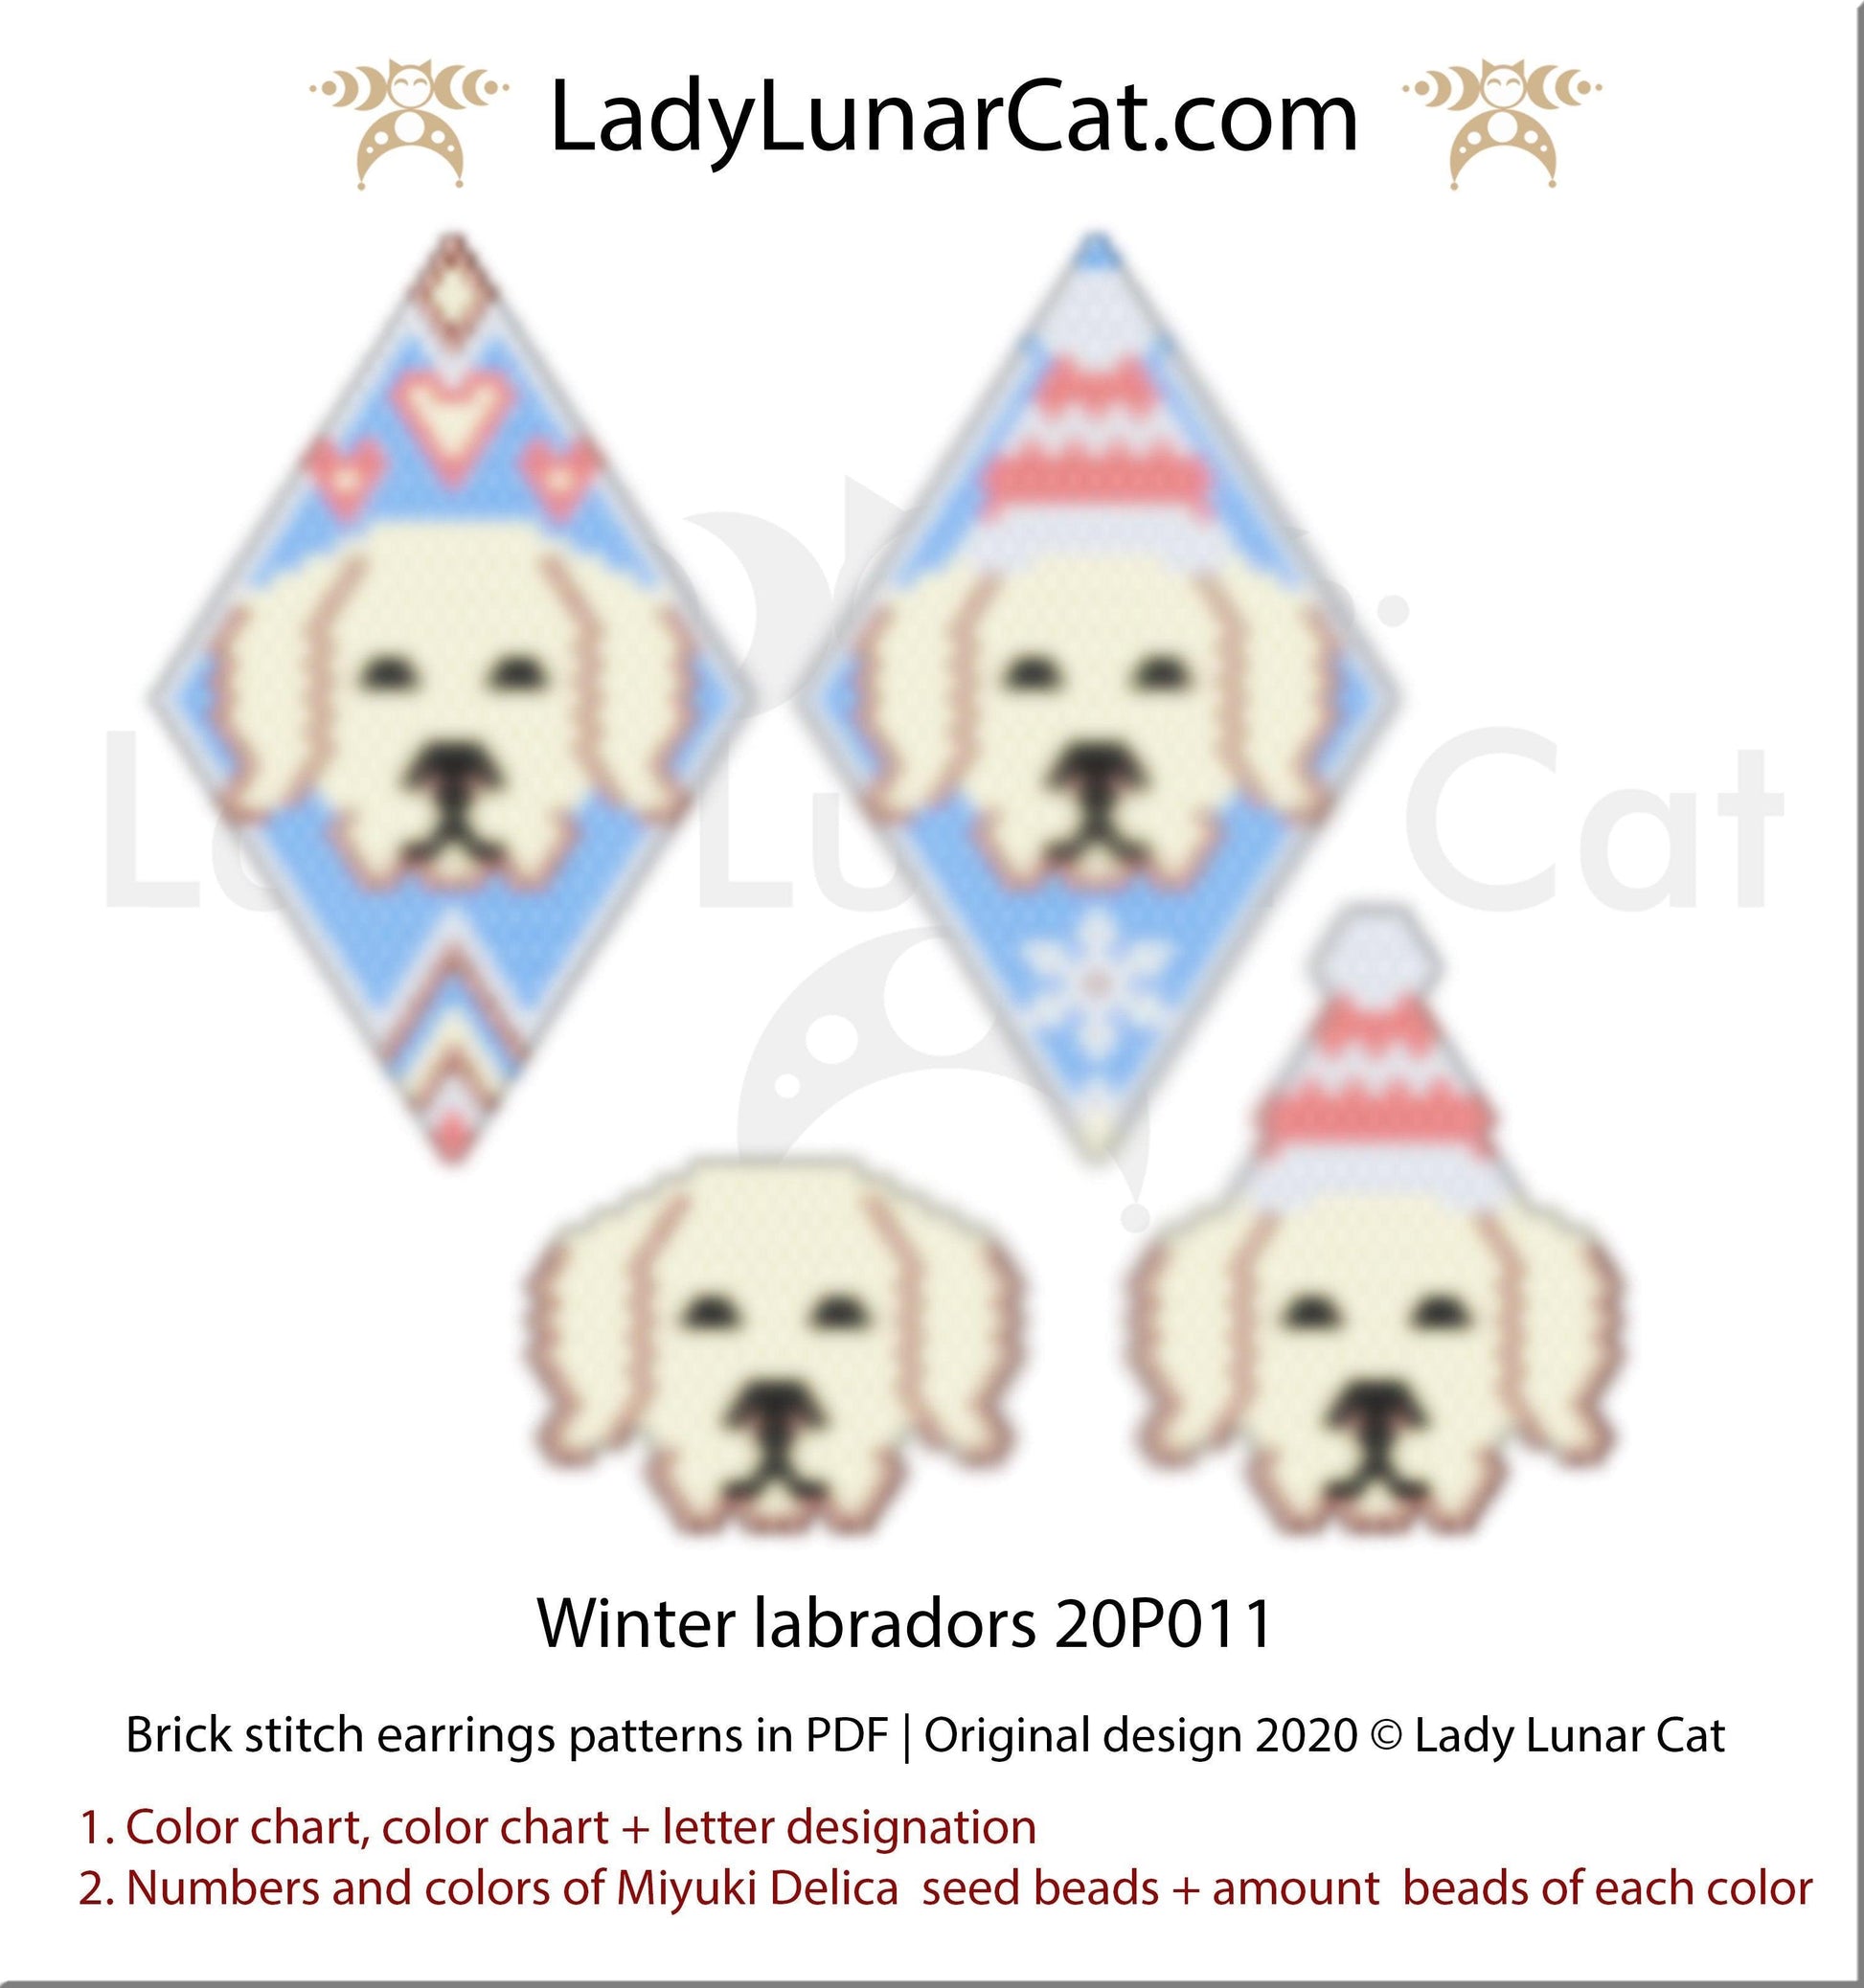 Brick stitch pattern for beading Winter Labradors 20P010 | Christmas beaded earrings tutorial LadyLunarCat